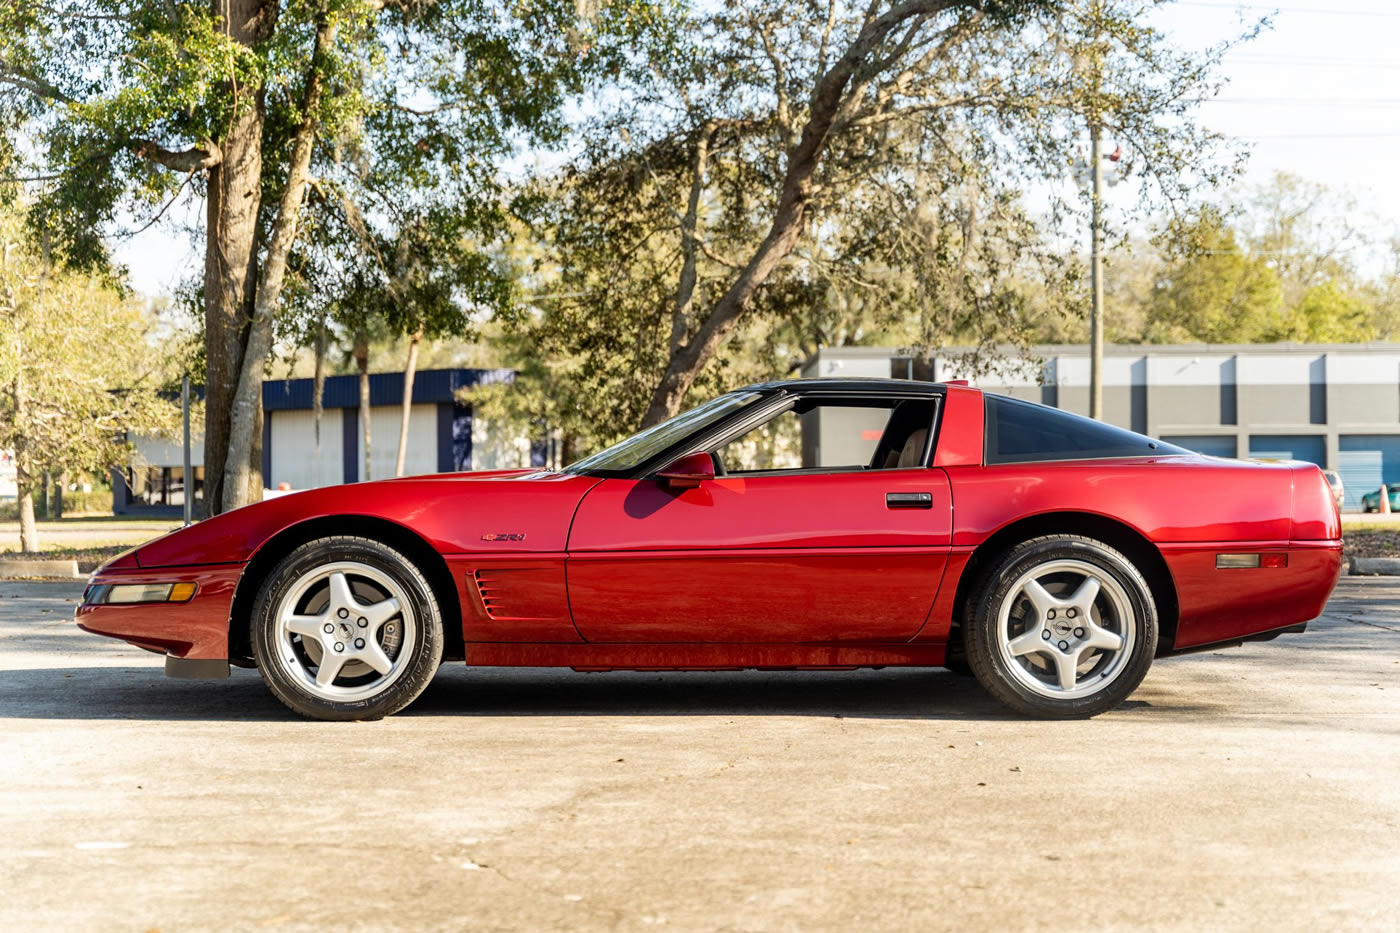 1995 Corvette ZR-1 in Dark Red Metallic